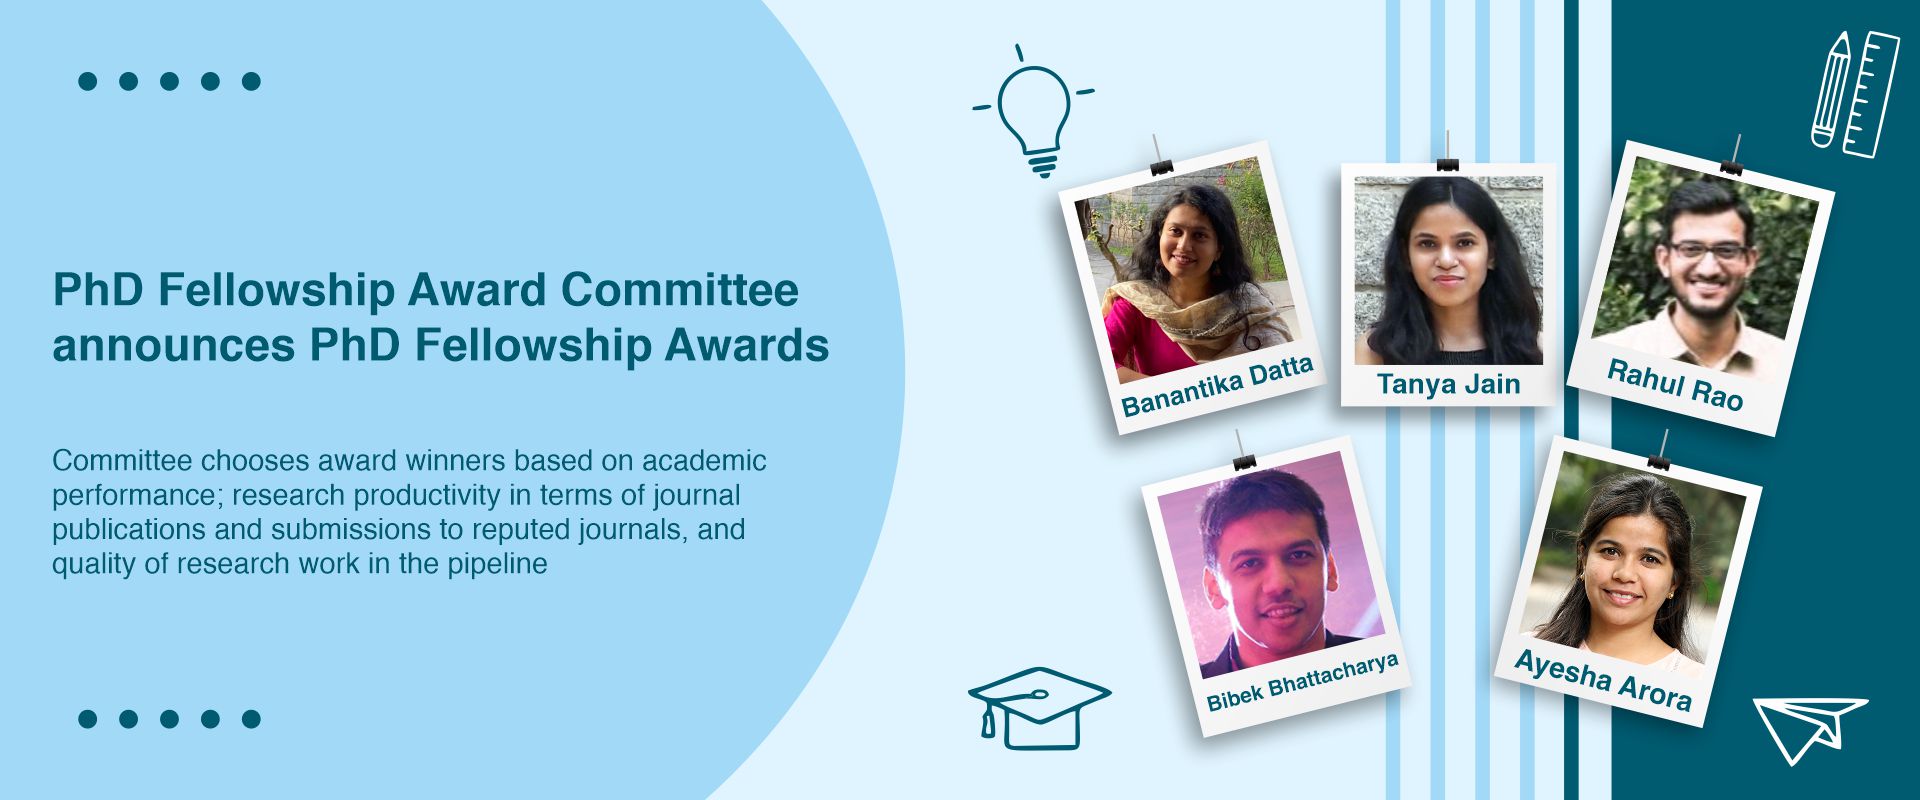 PhD Fellowship Award Committee announces PhD Fellowship Awards